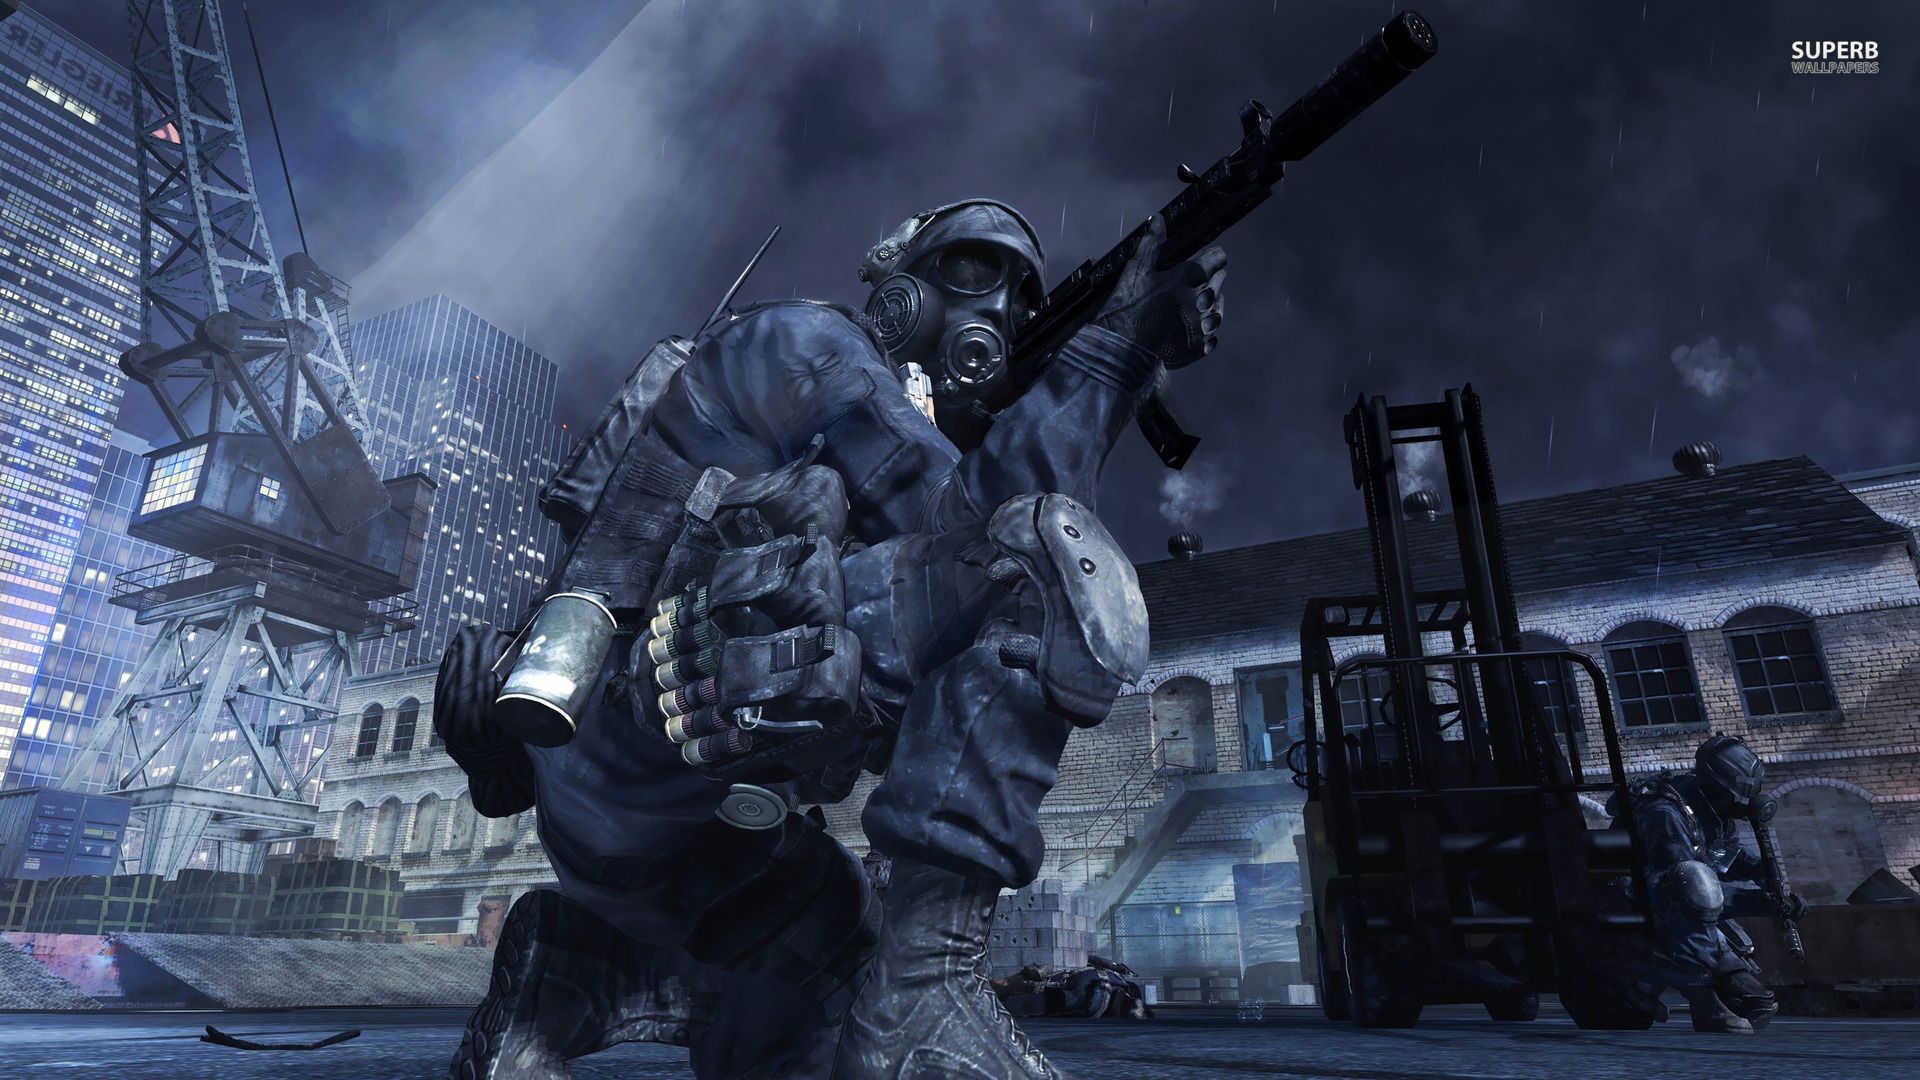 Call of Duty Modern Warfare 3 wallpaper - Game wallpapers